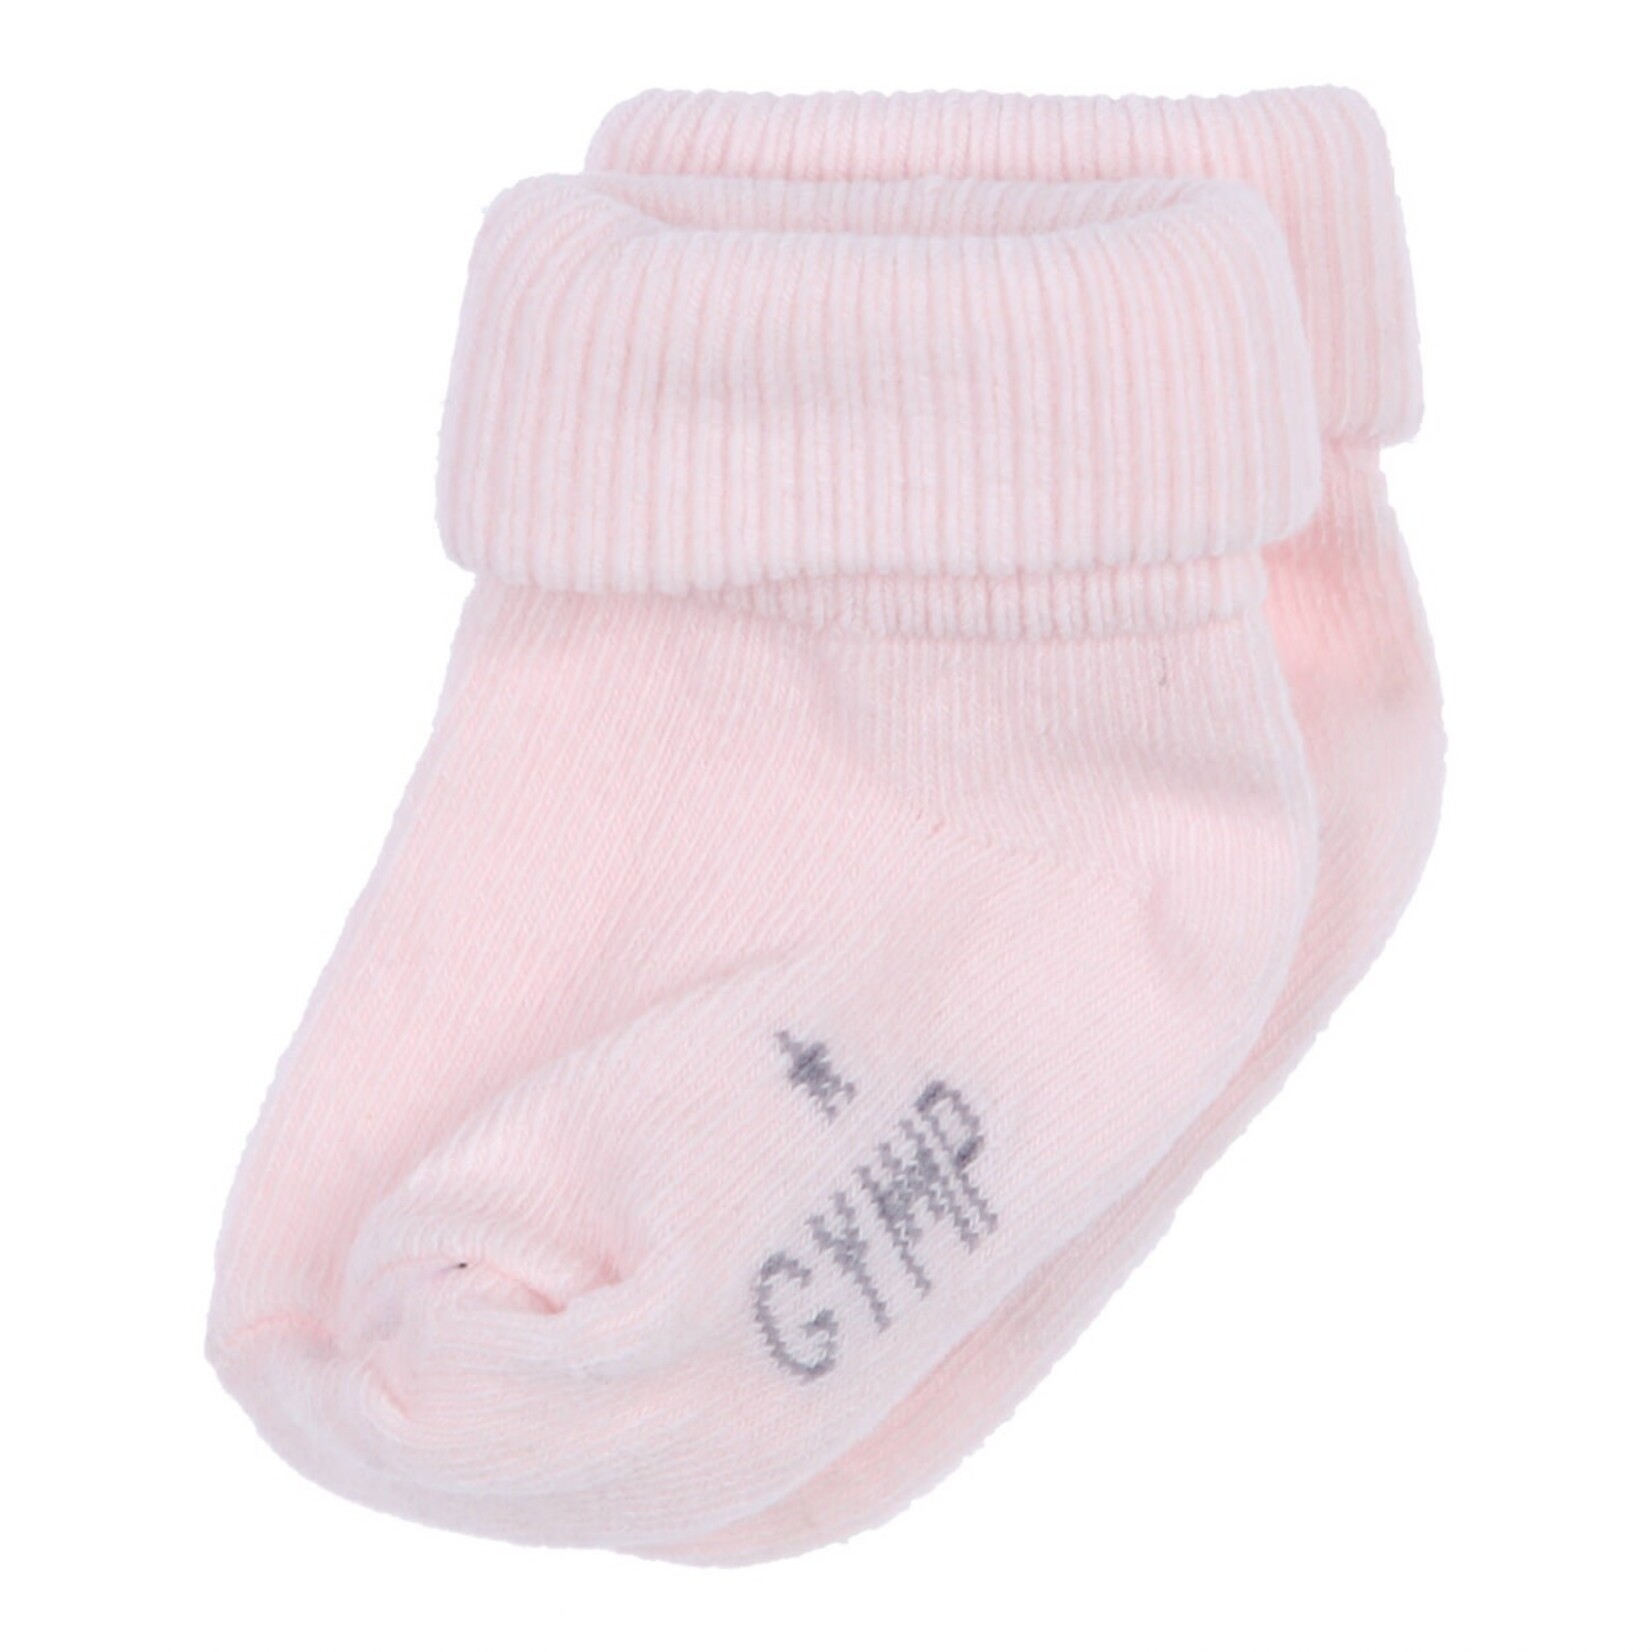 Gymp Socks Kite_Light Pink